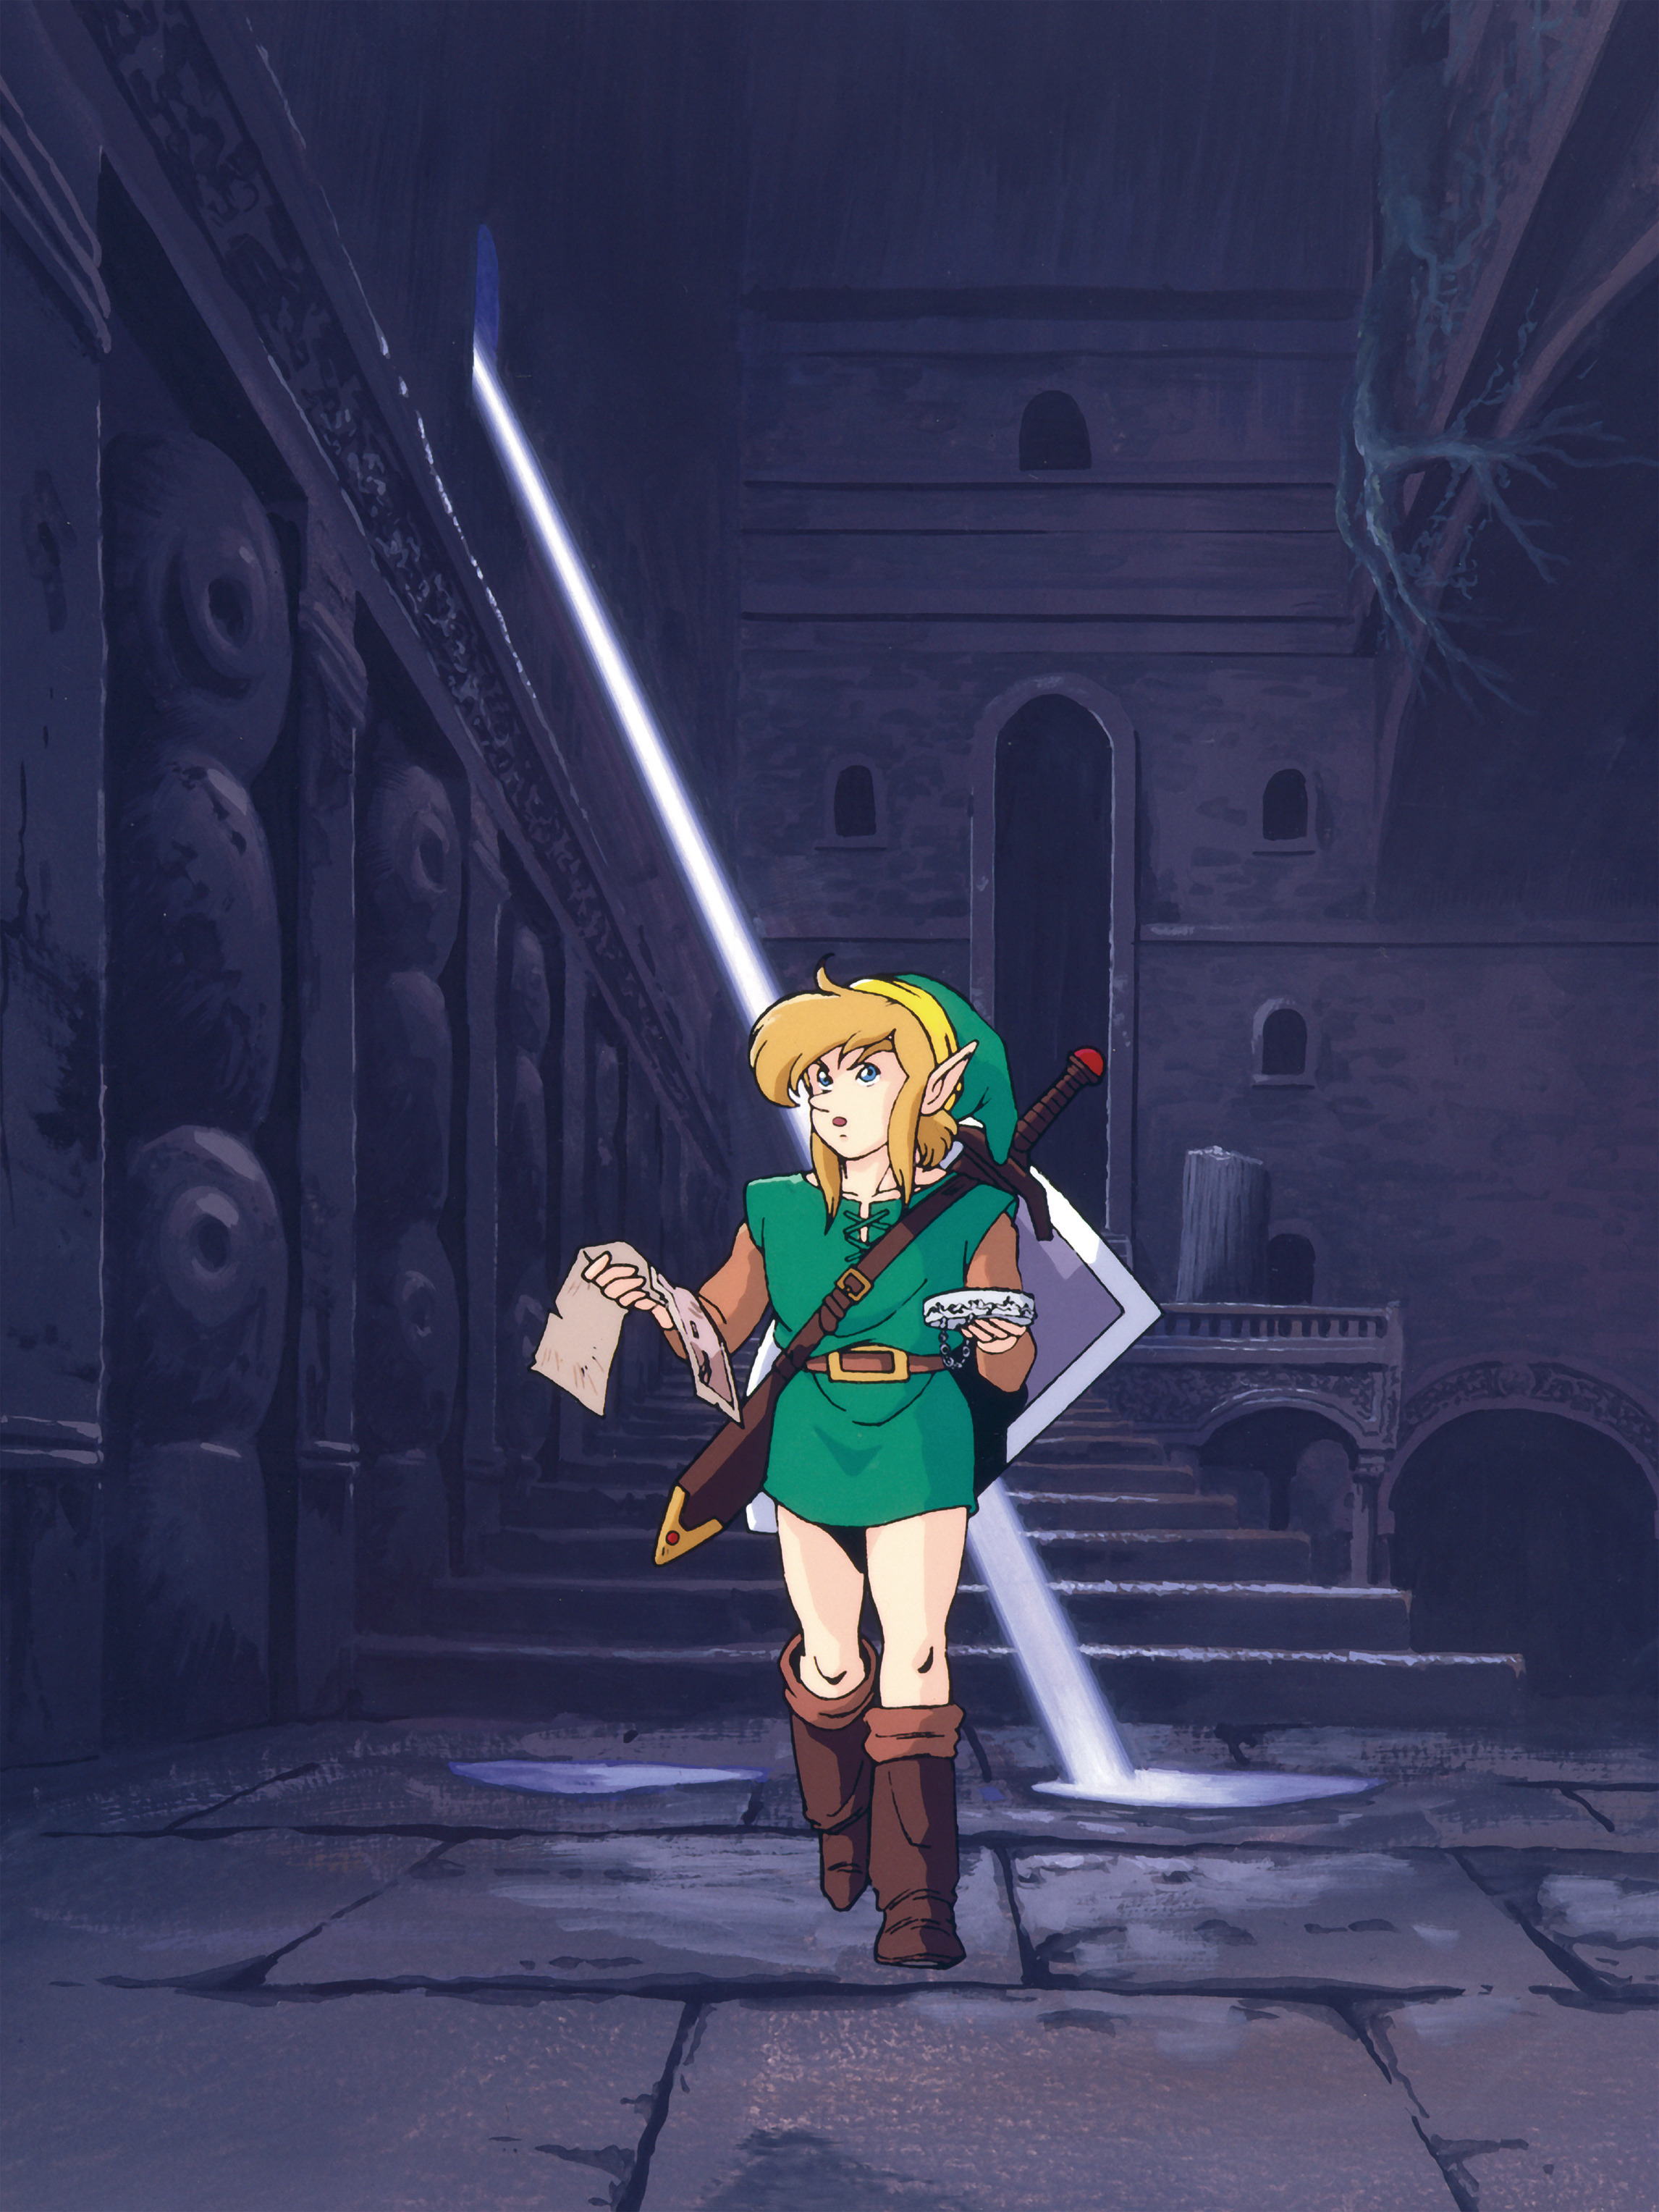 Who is The Minish Cap's Link? - Zelda Dungeon